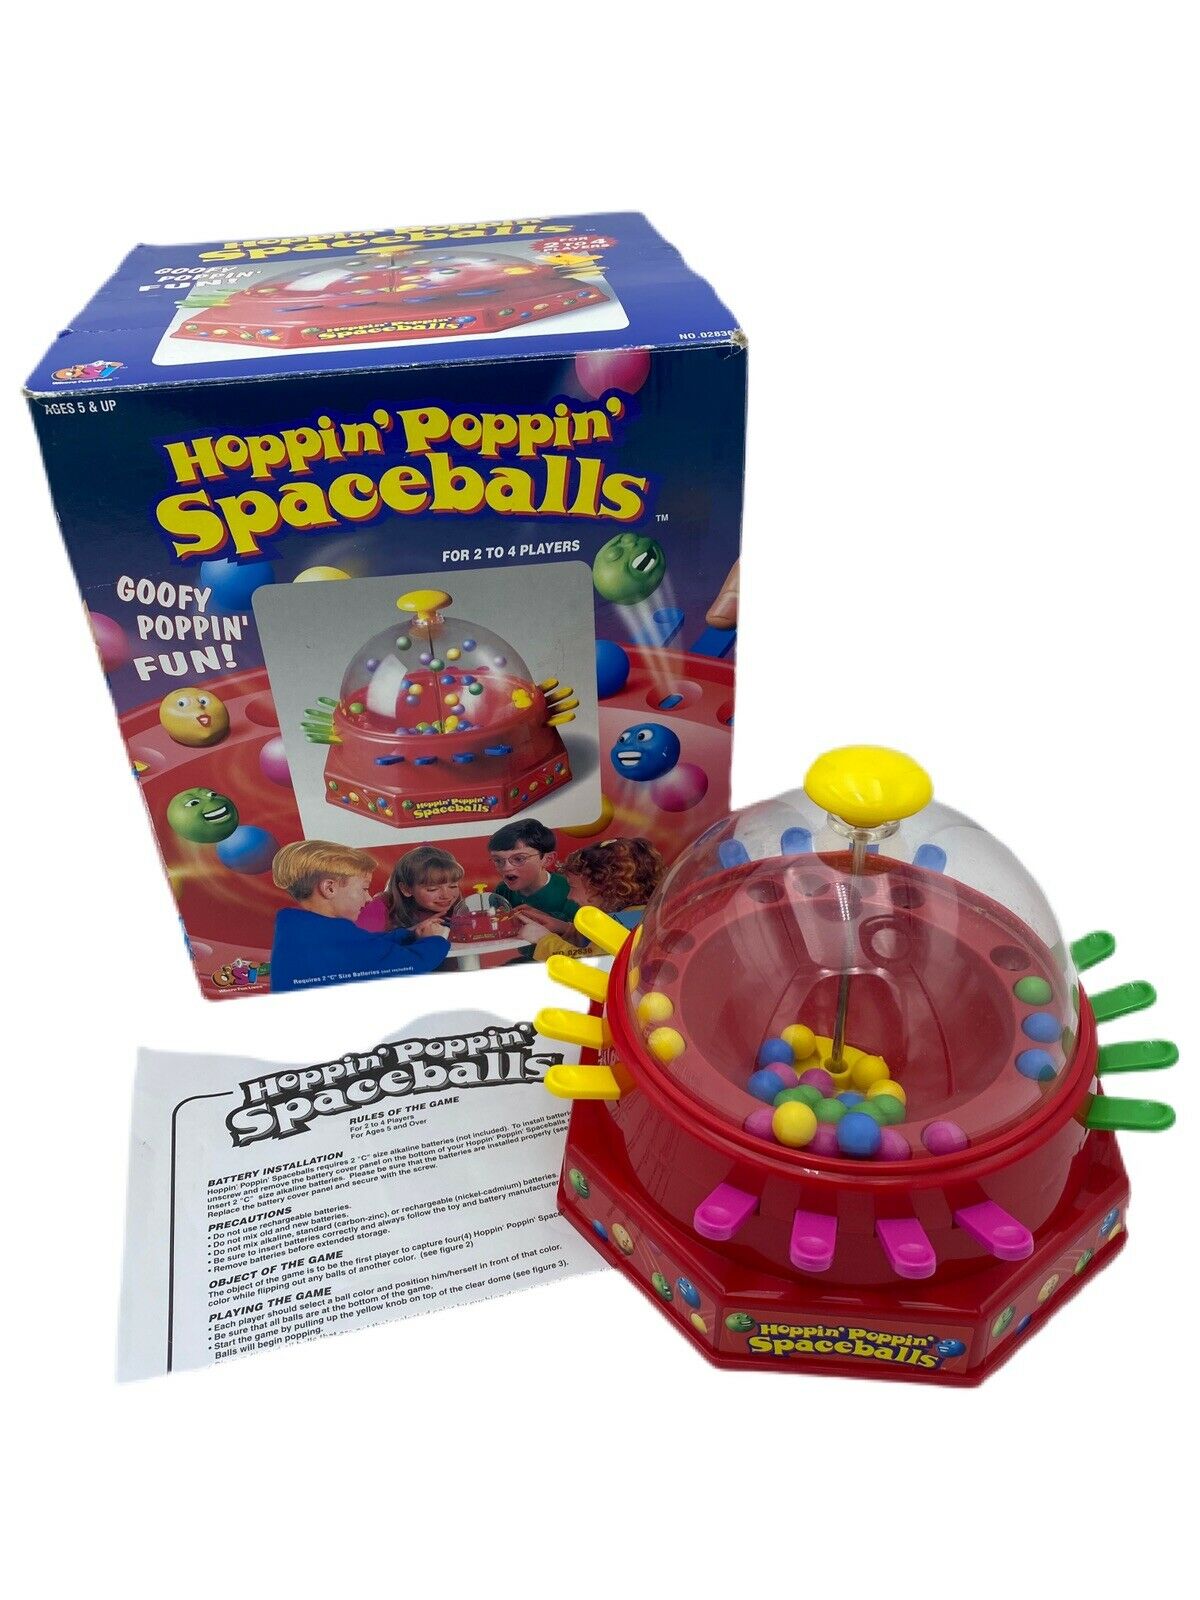 Hoppin Poppin Spaceballs Game 1997 Vintage 90s Toy Game Motorized Spinning Works